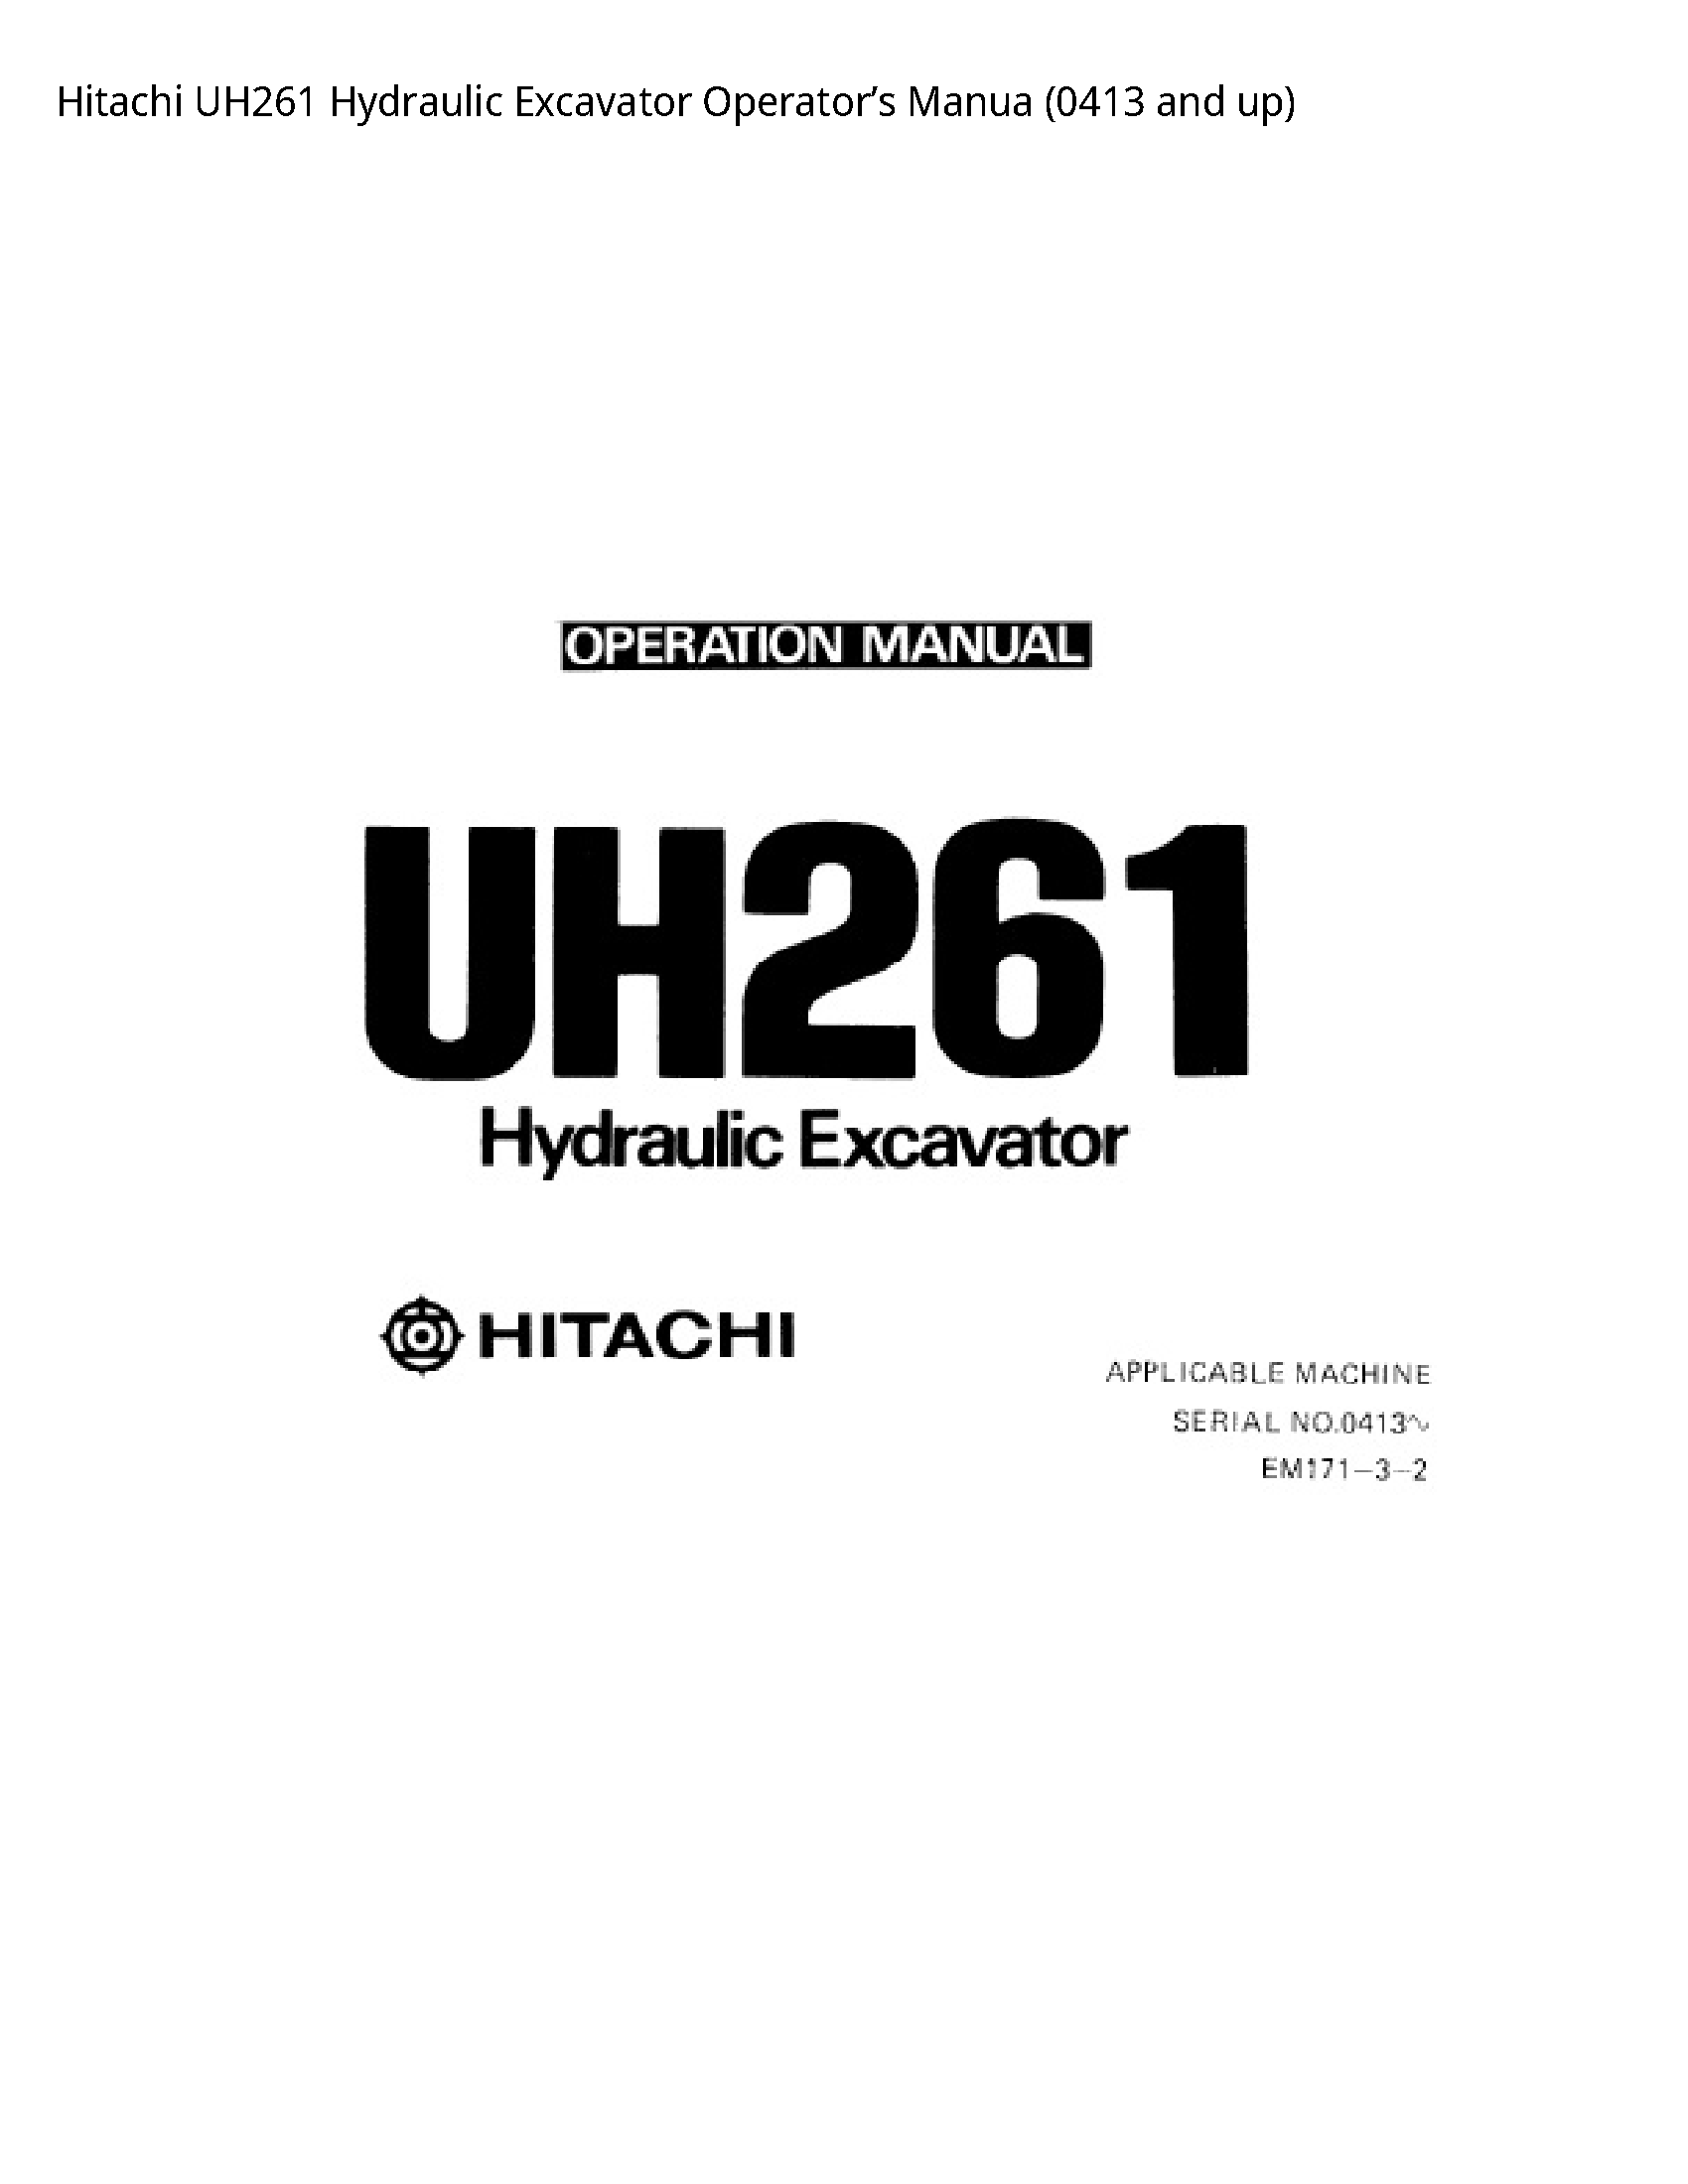 Hitachi UH261 Hydraulic Excavator Operator’s Manua  up) manual